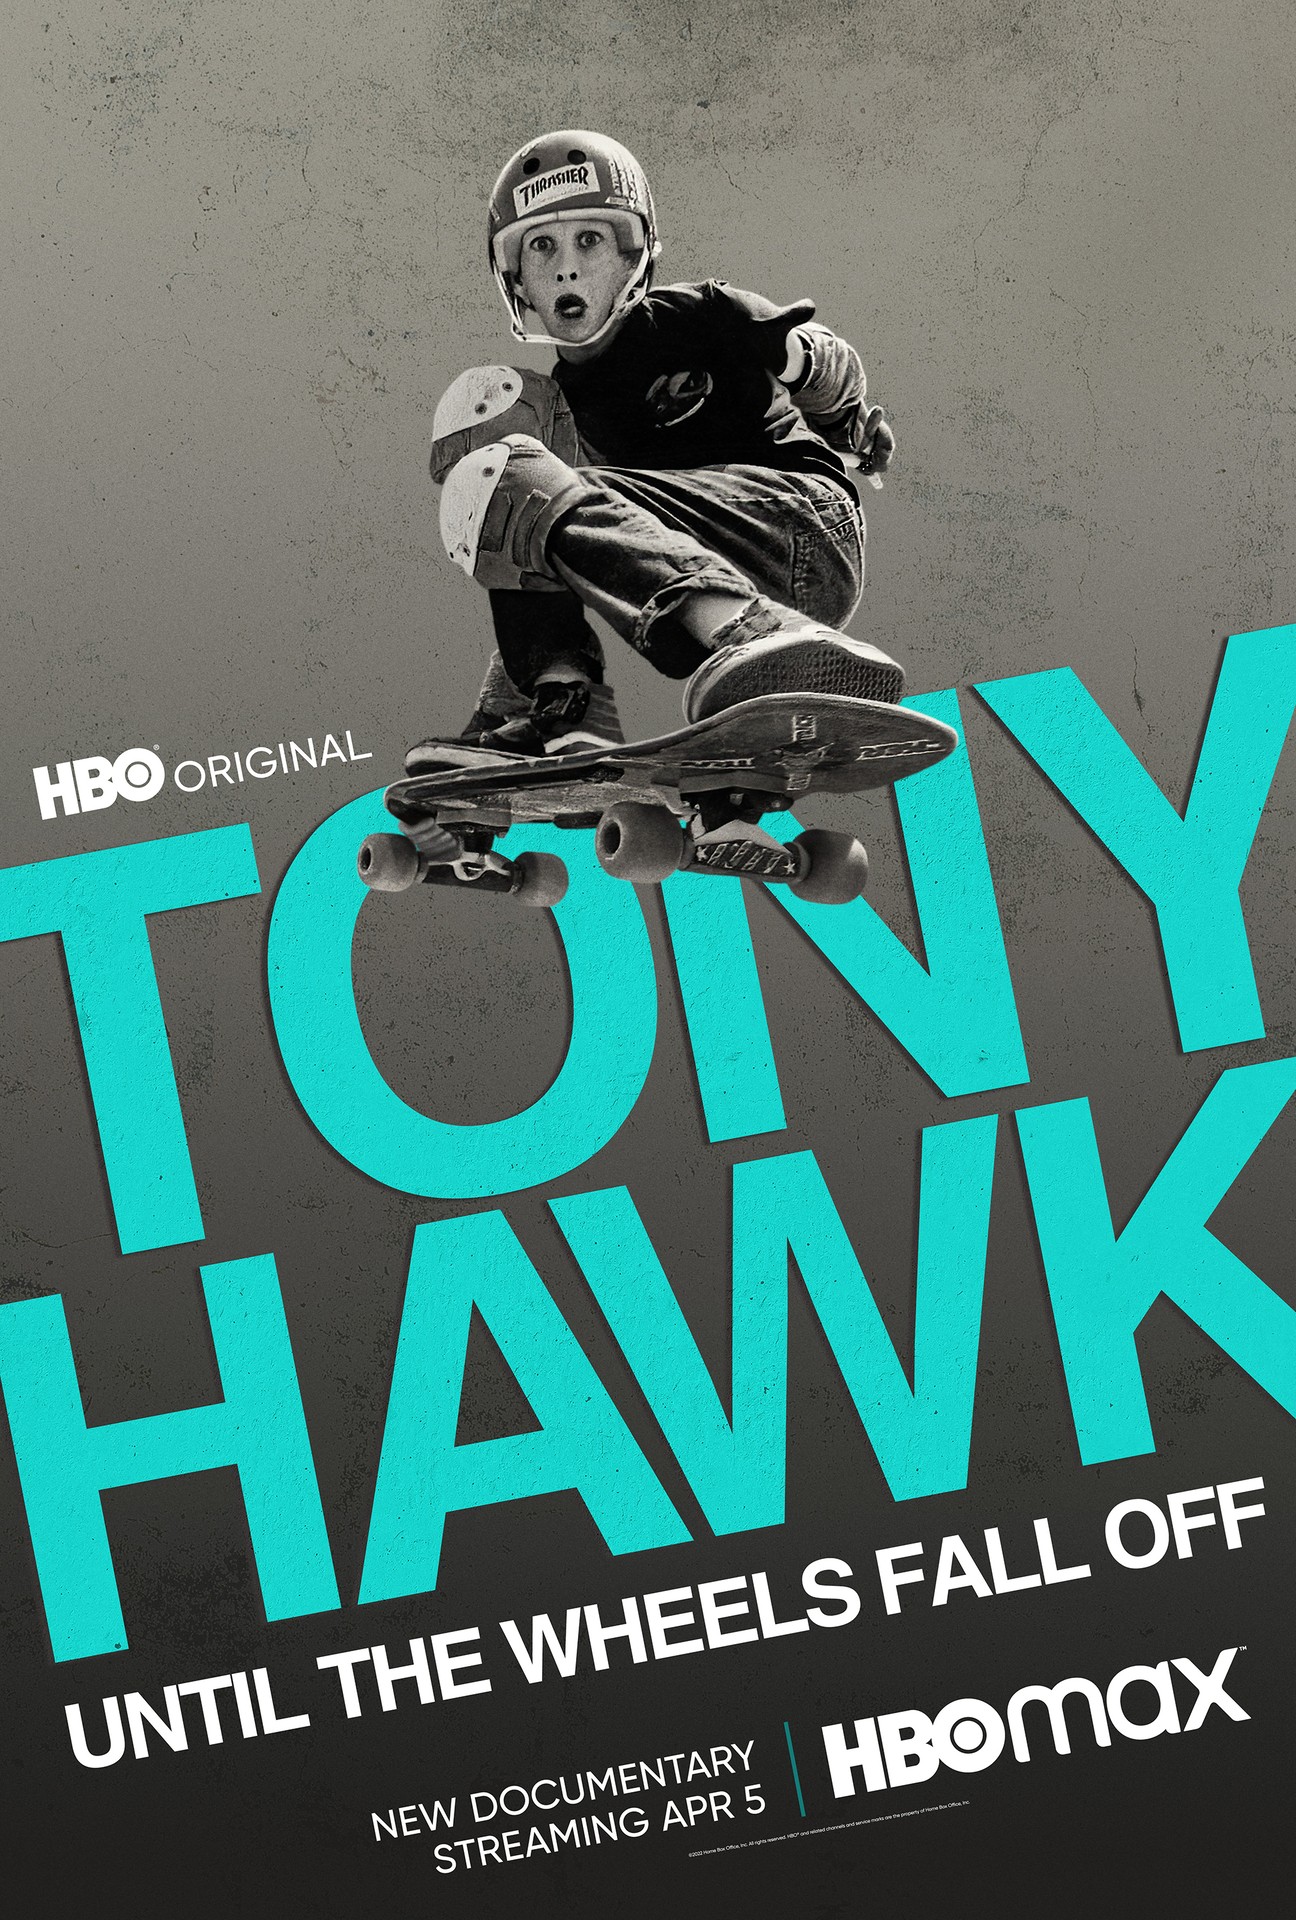 Tony Hawk, Biography, Skateboarding, & Facts